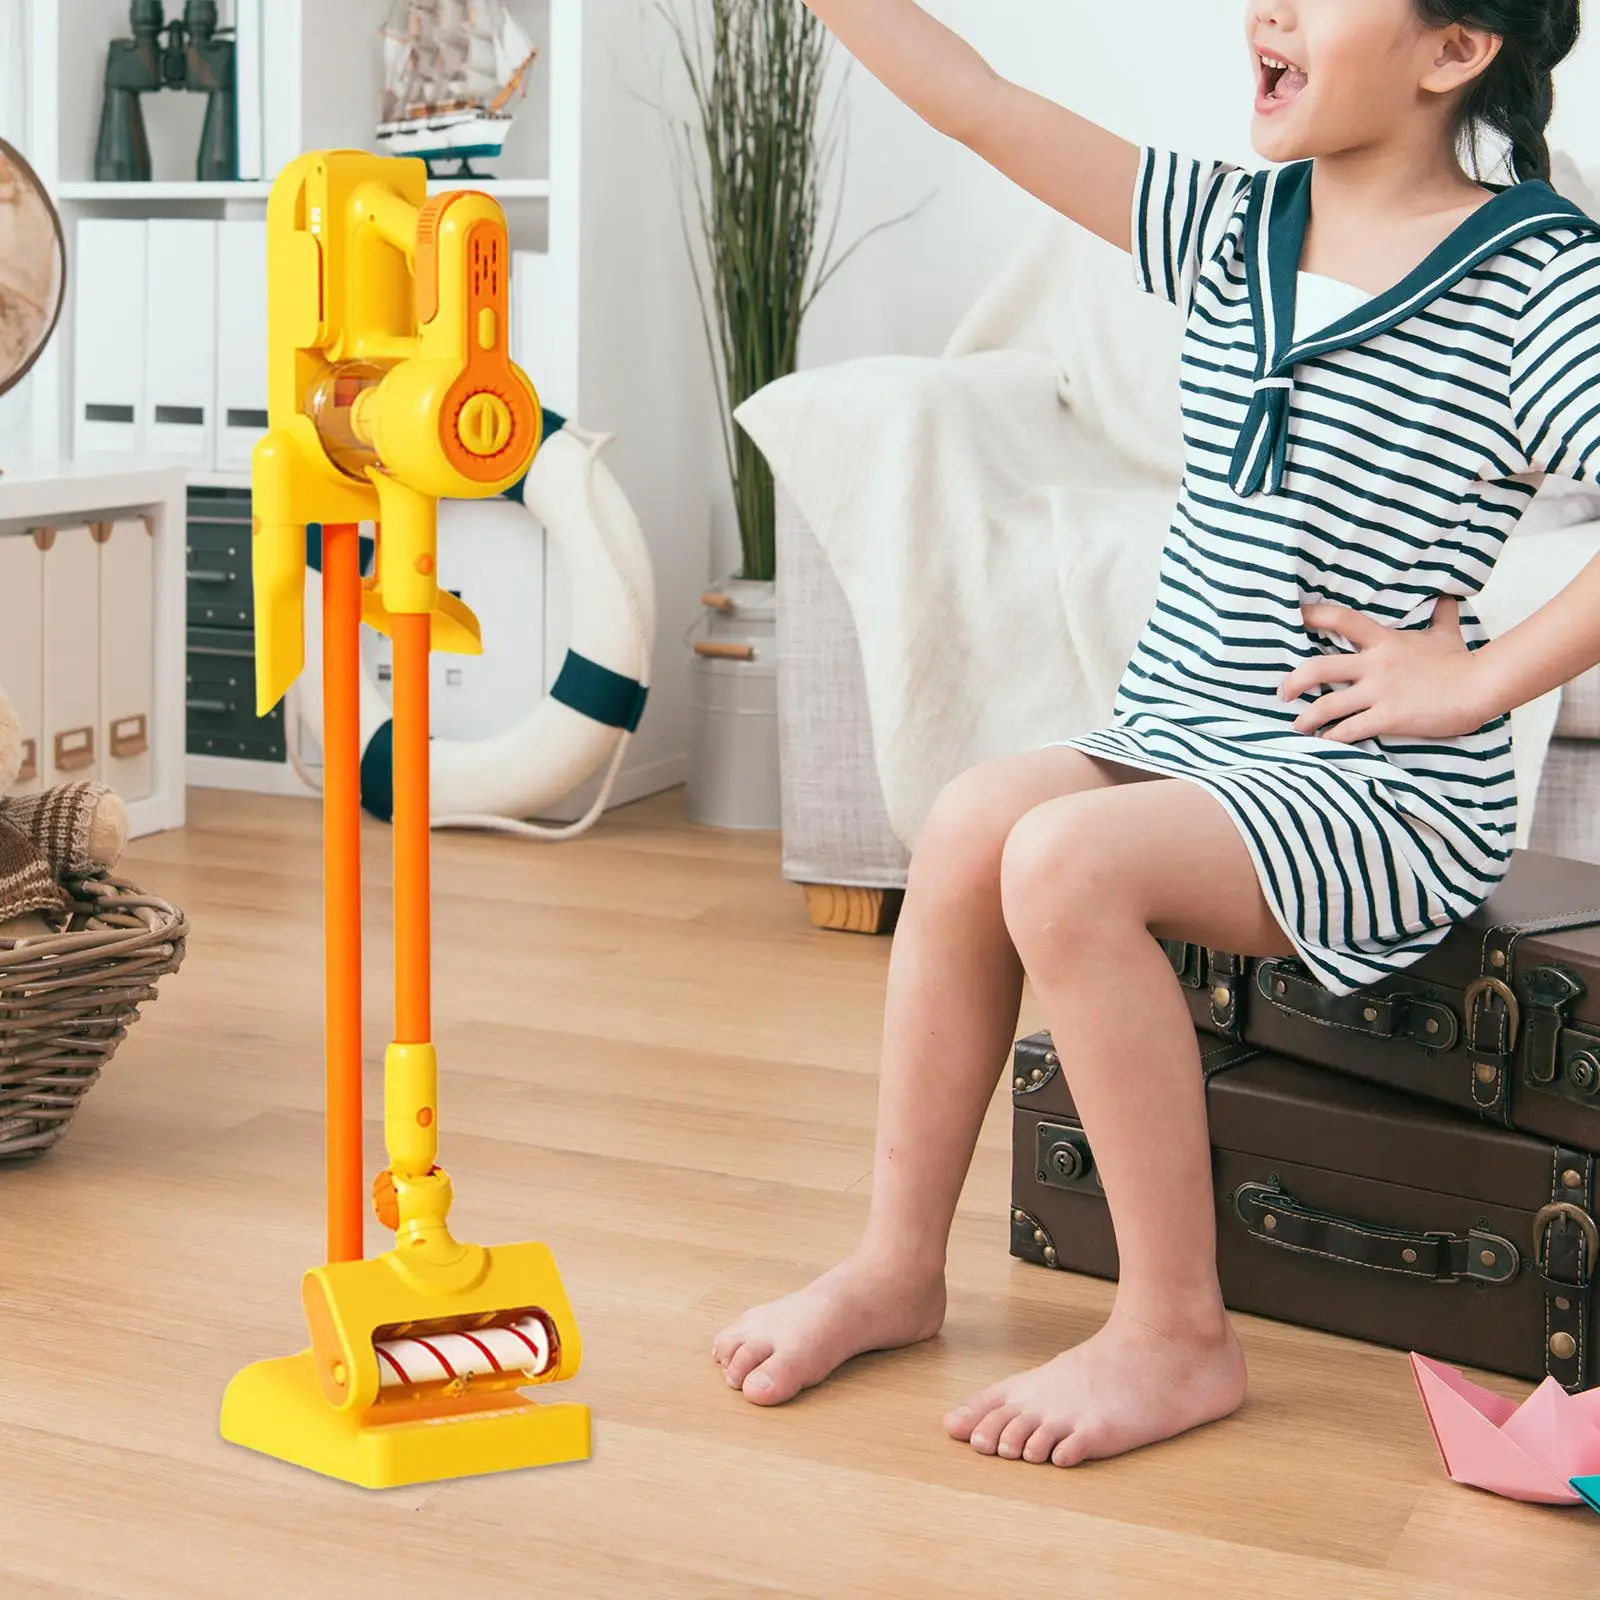 Vacuum Toy Pretend Play Toy Vacuum Cleaner Kids Vacuum Cleaner Toy house Cleaning Toy for Kids Boys Children Girls Gift